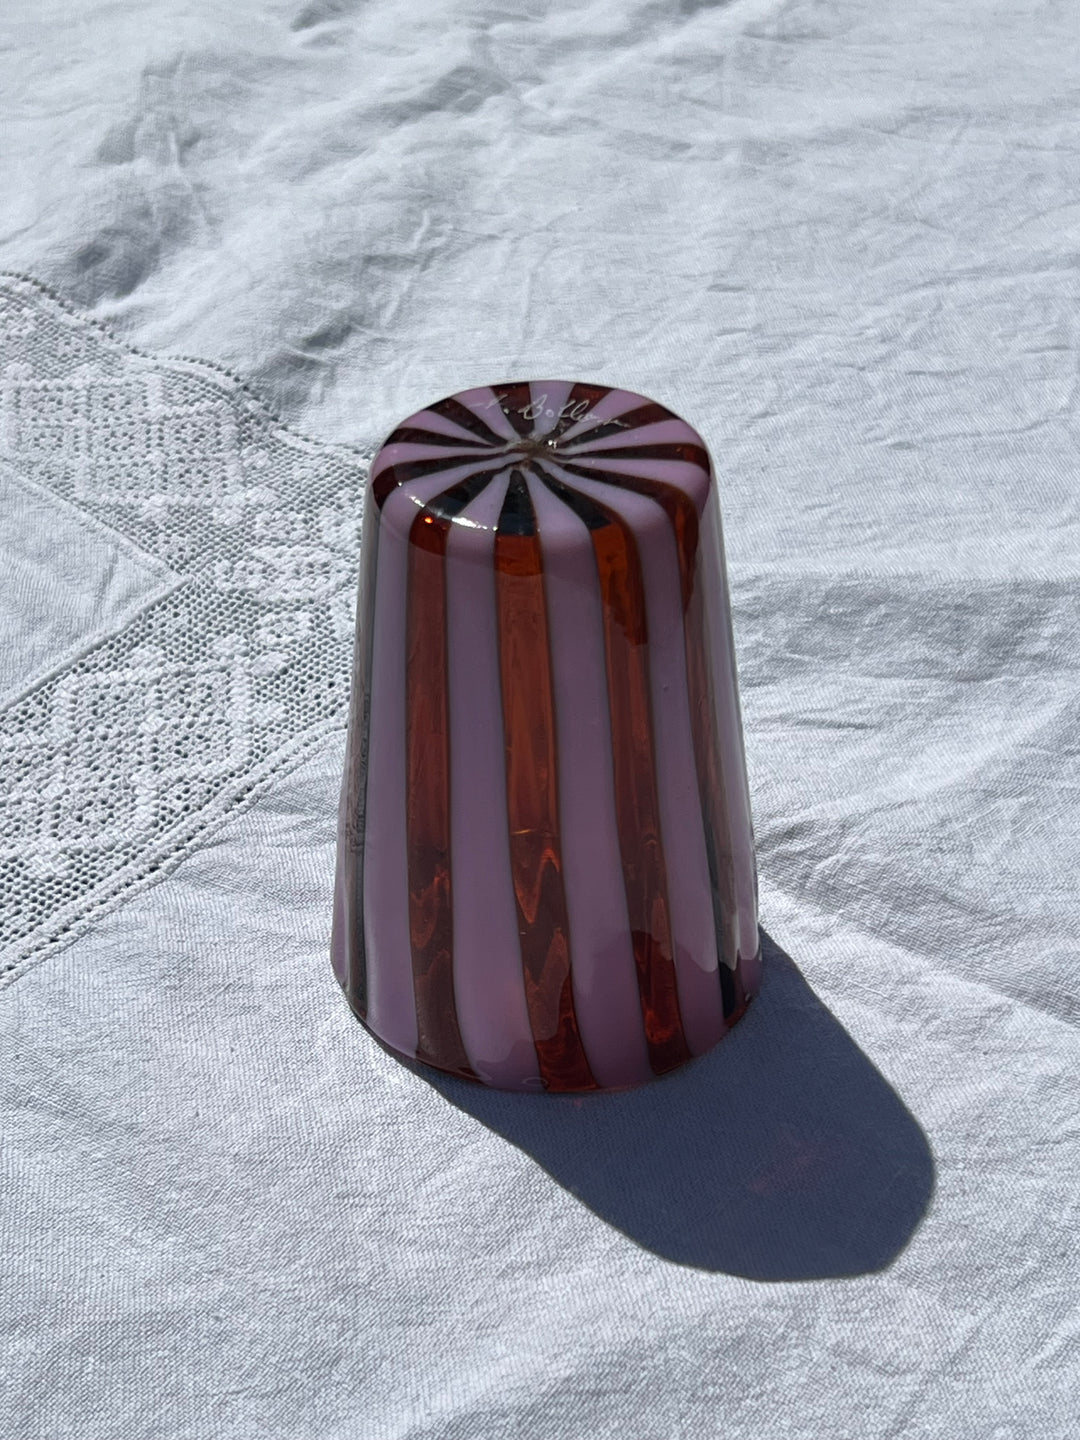 Håndblæst Murano Glas i Gio Ponti Stil med Karamelfarvede og Ametyst Striber Murano